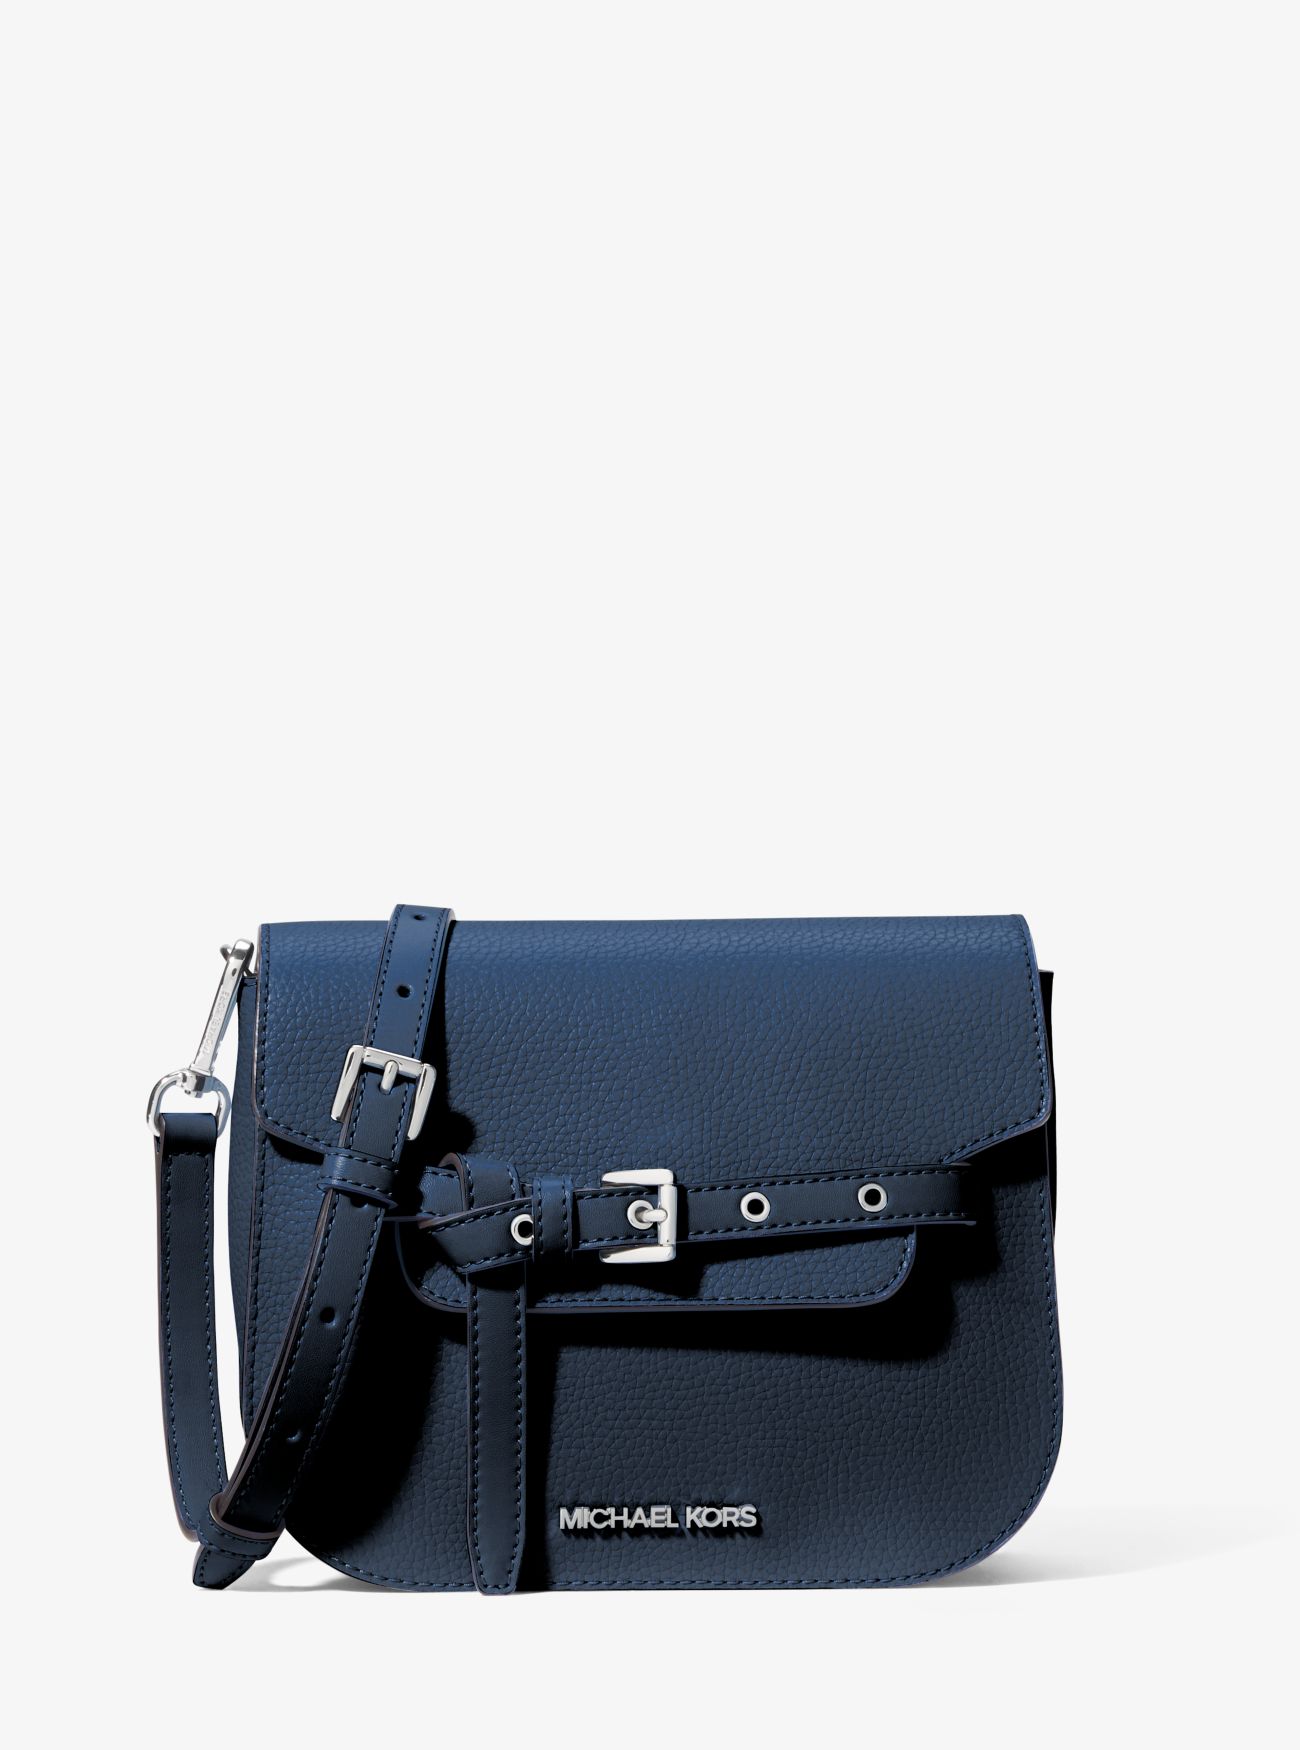 MK Emilia Small Pebbled Leather Crossbody Bag - Blue - Michael Kors